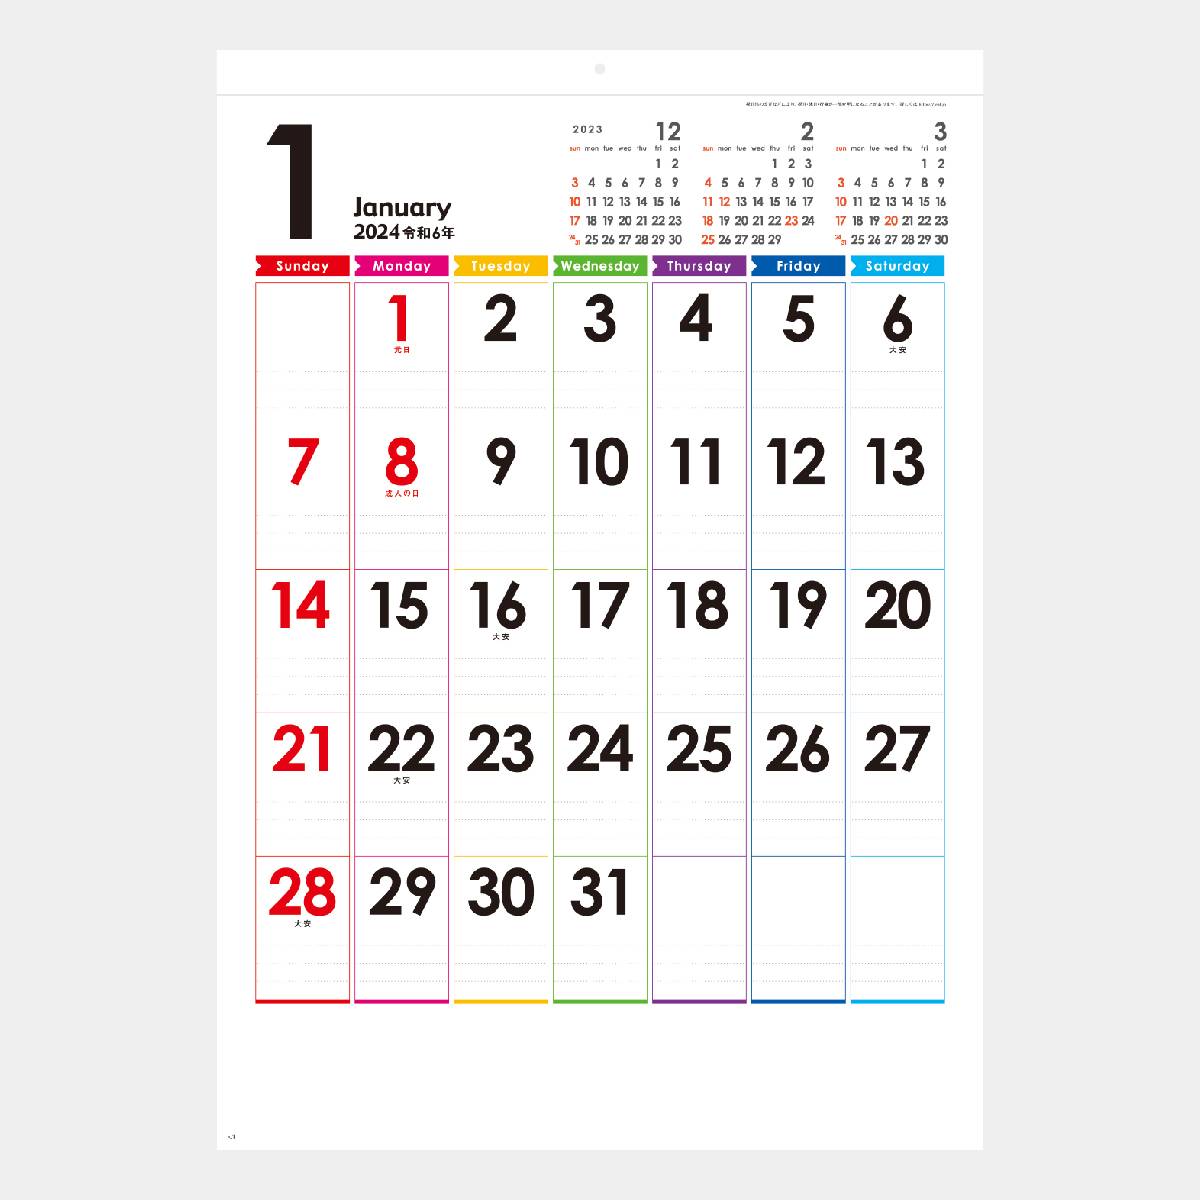 SG-448 レインボーカレンダー 2023年版の名入れカレンダーを格安で販売｜名入れカレンダー印刷.com